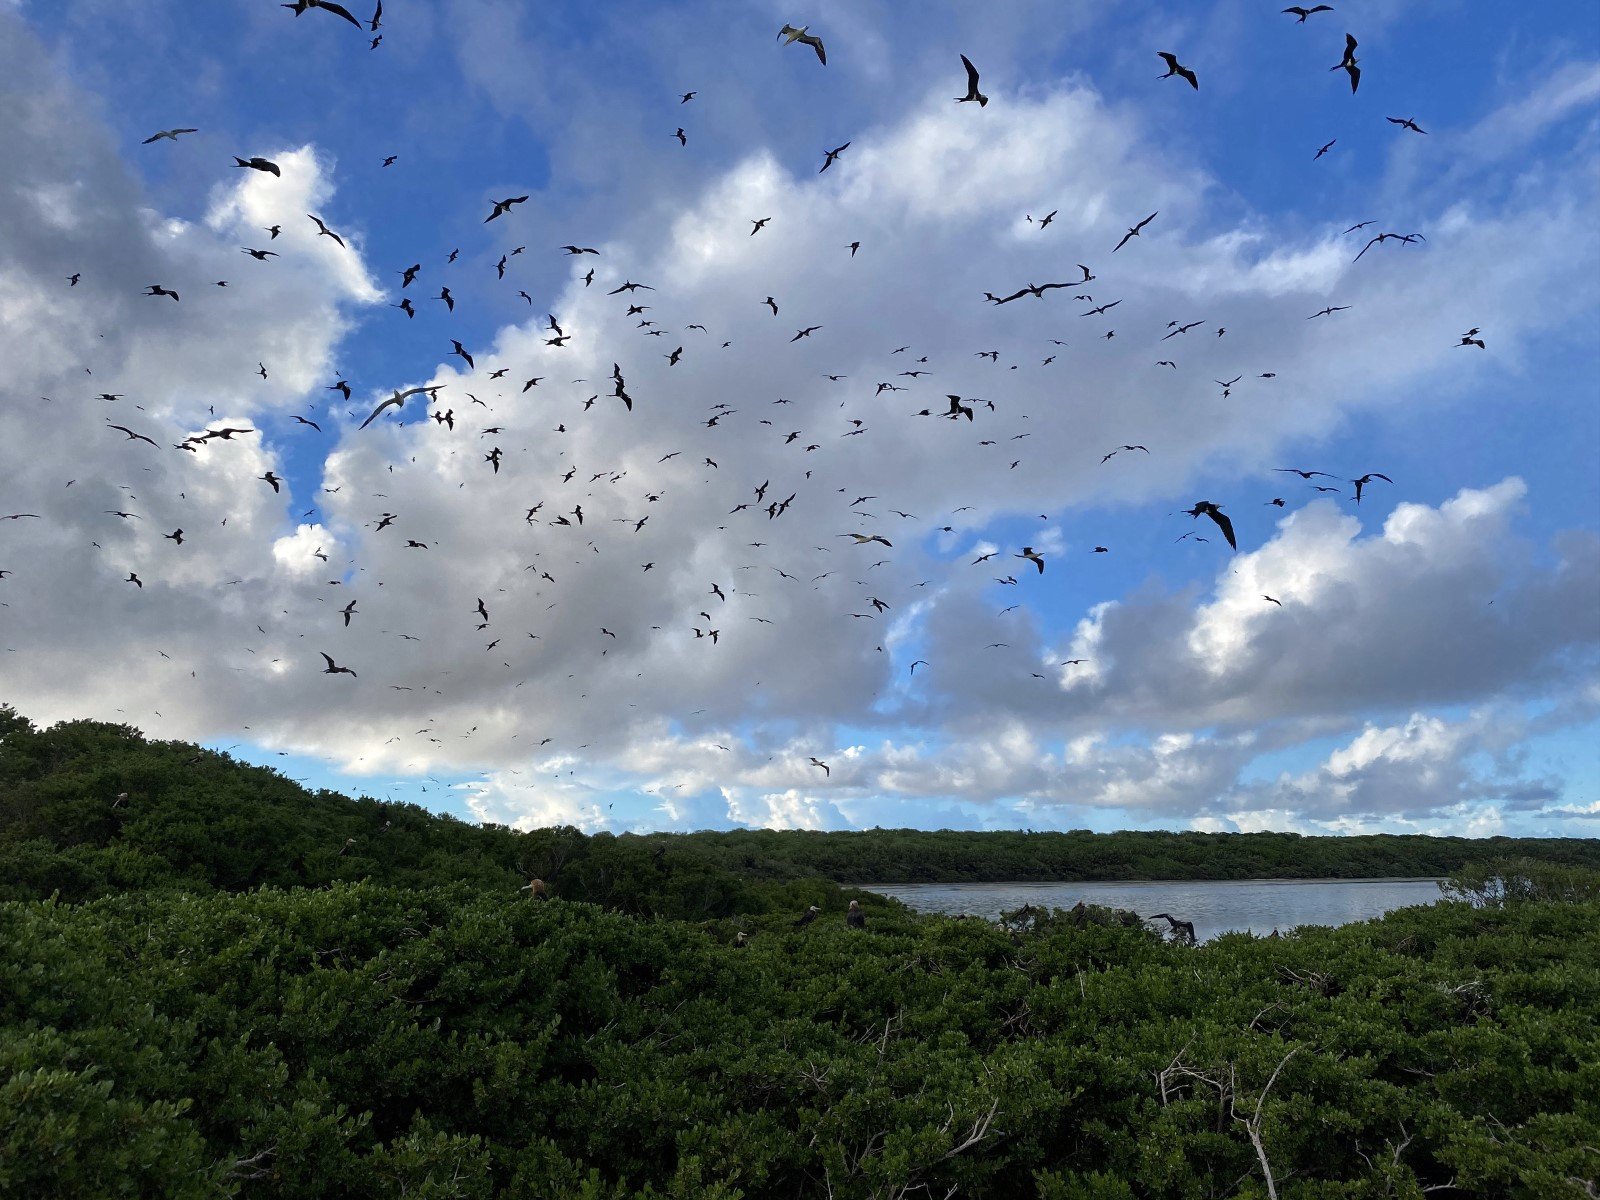 Frigatebirds, boobies and other seabirds soar overhead at Pulu Keeling